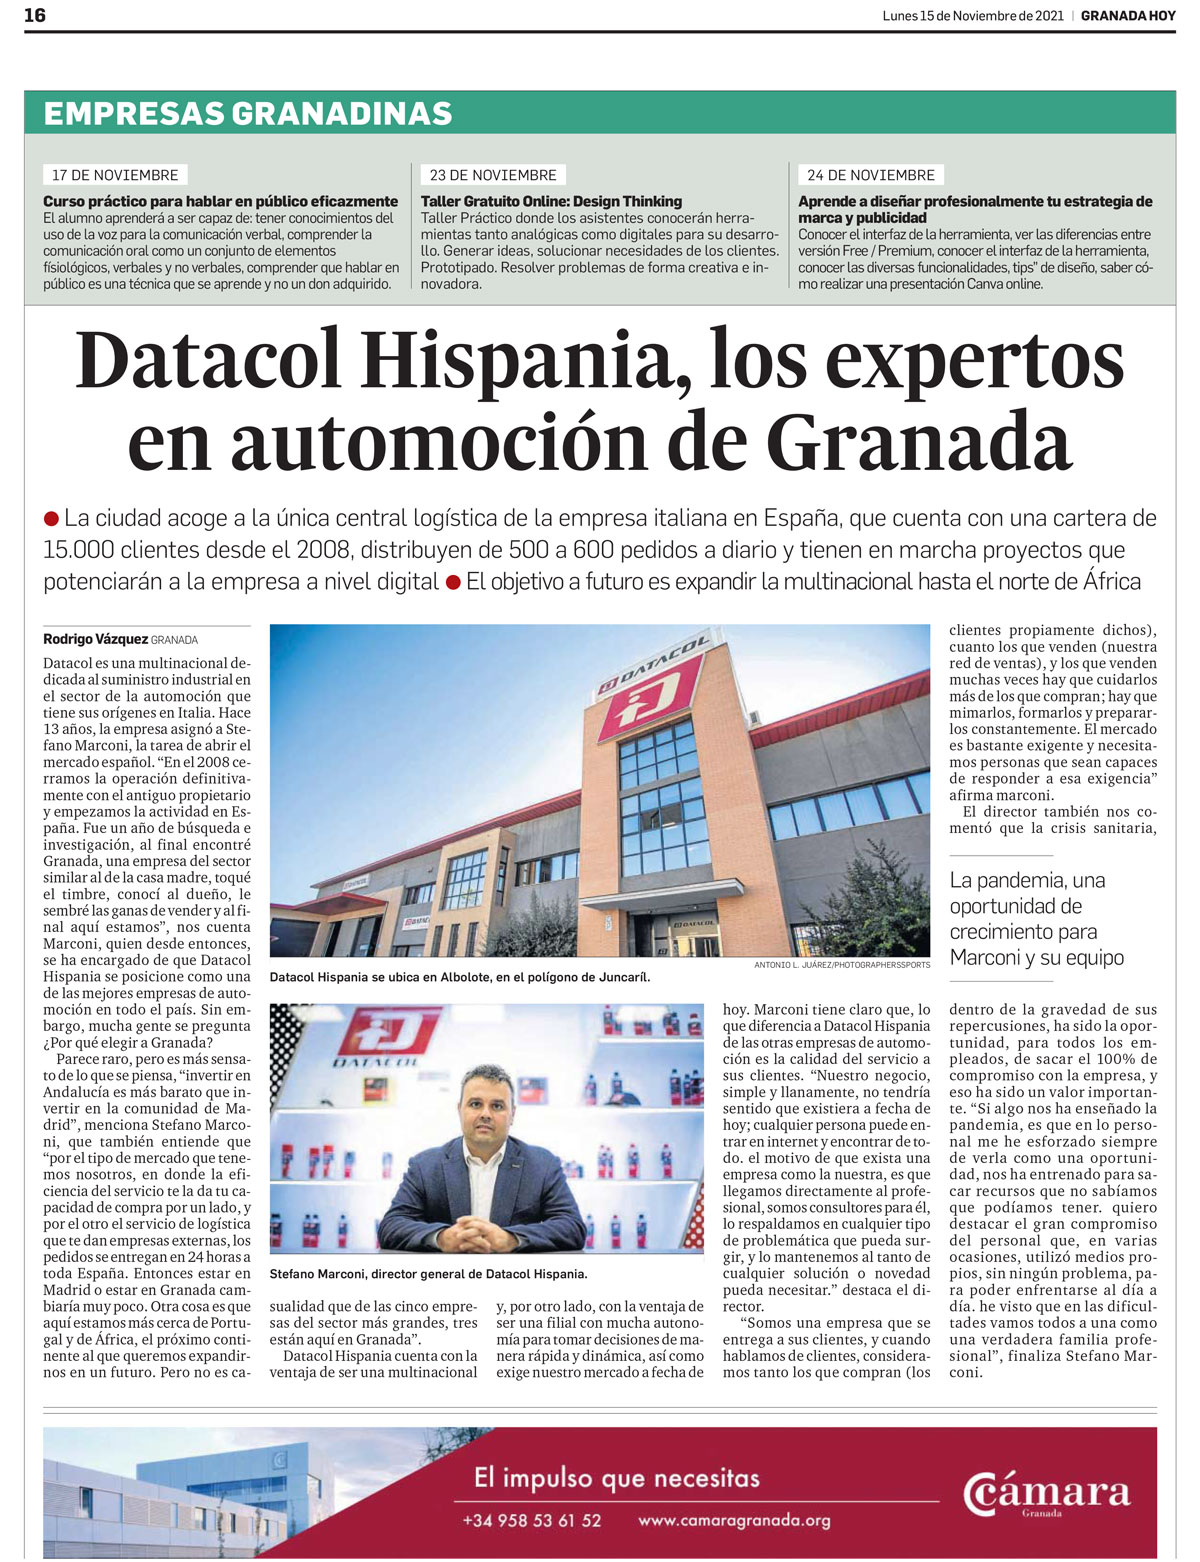 Datacol Hispania Empresas Granadinas